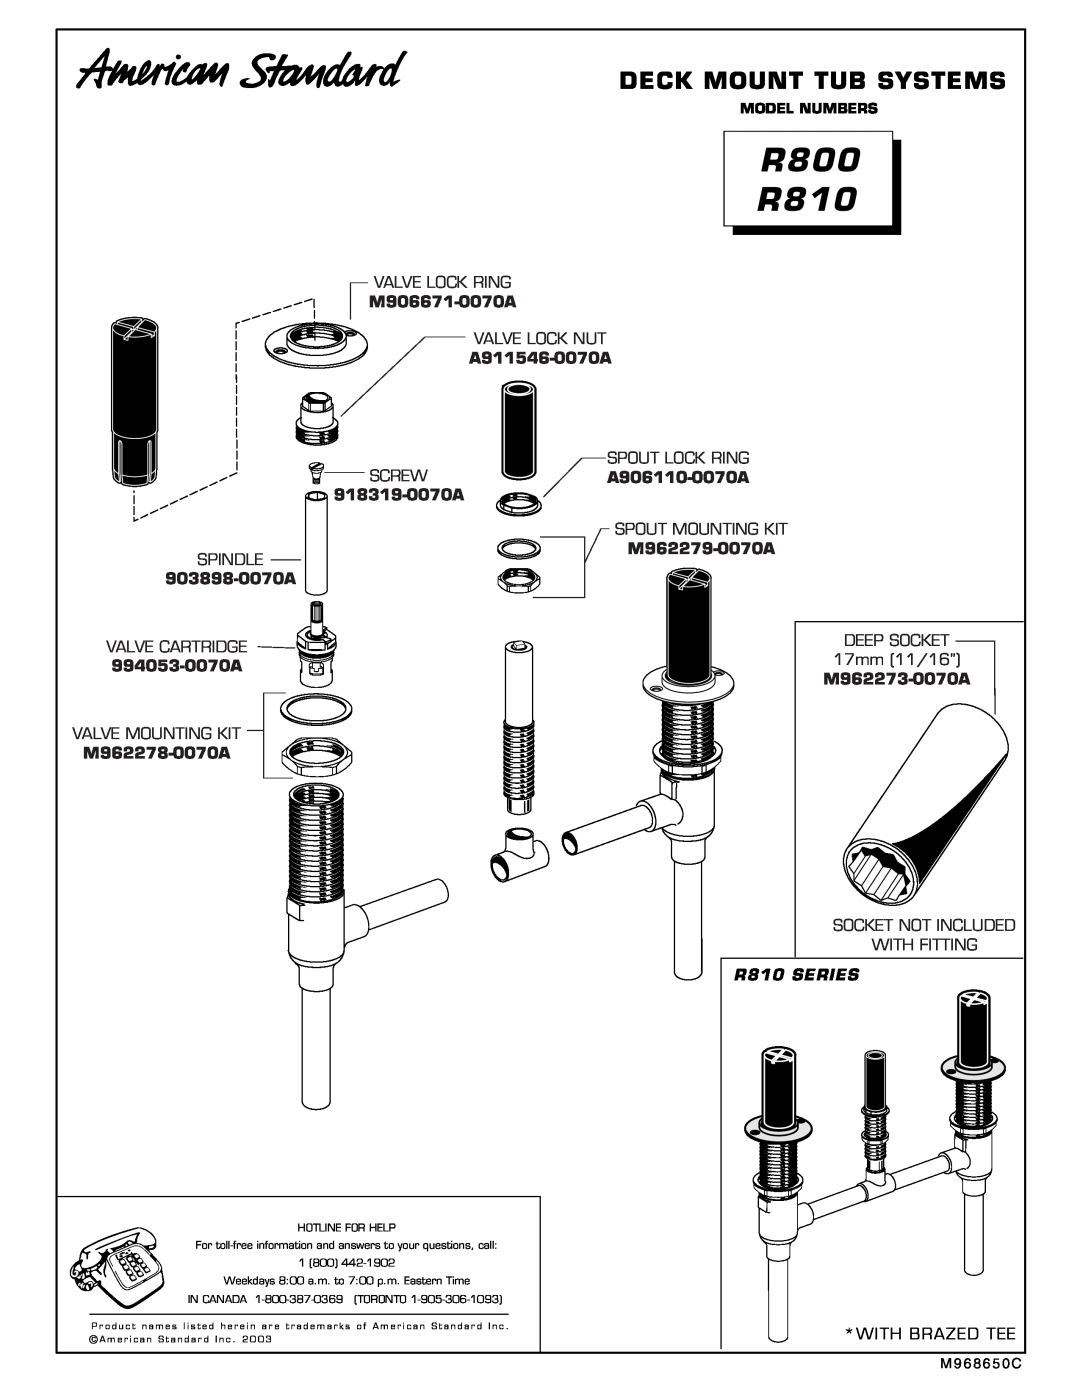 American Standard M950143-0070A manual R800 R810, Deck Mount Tub Systems, M906671-0070A, A911546-0070A, A906110-0070A 